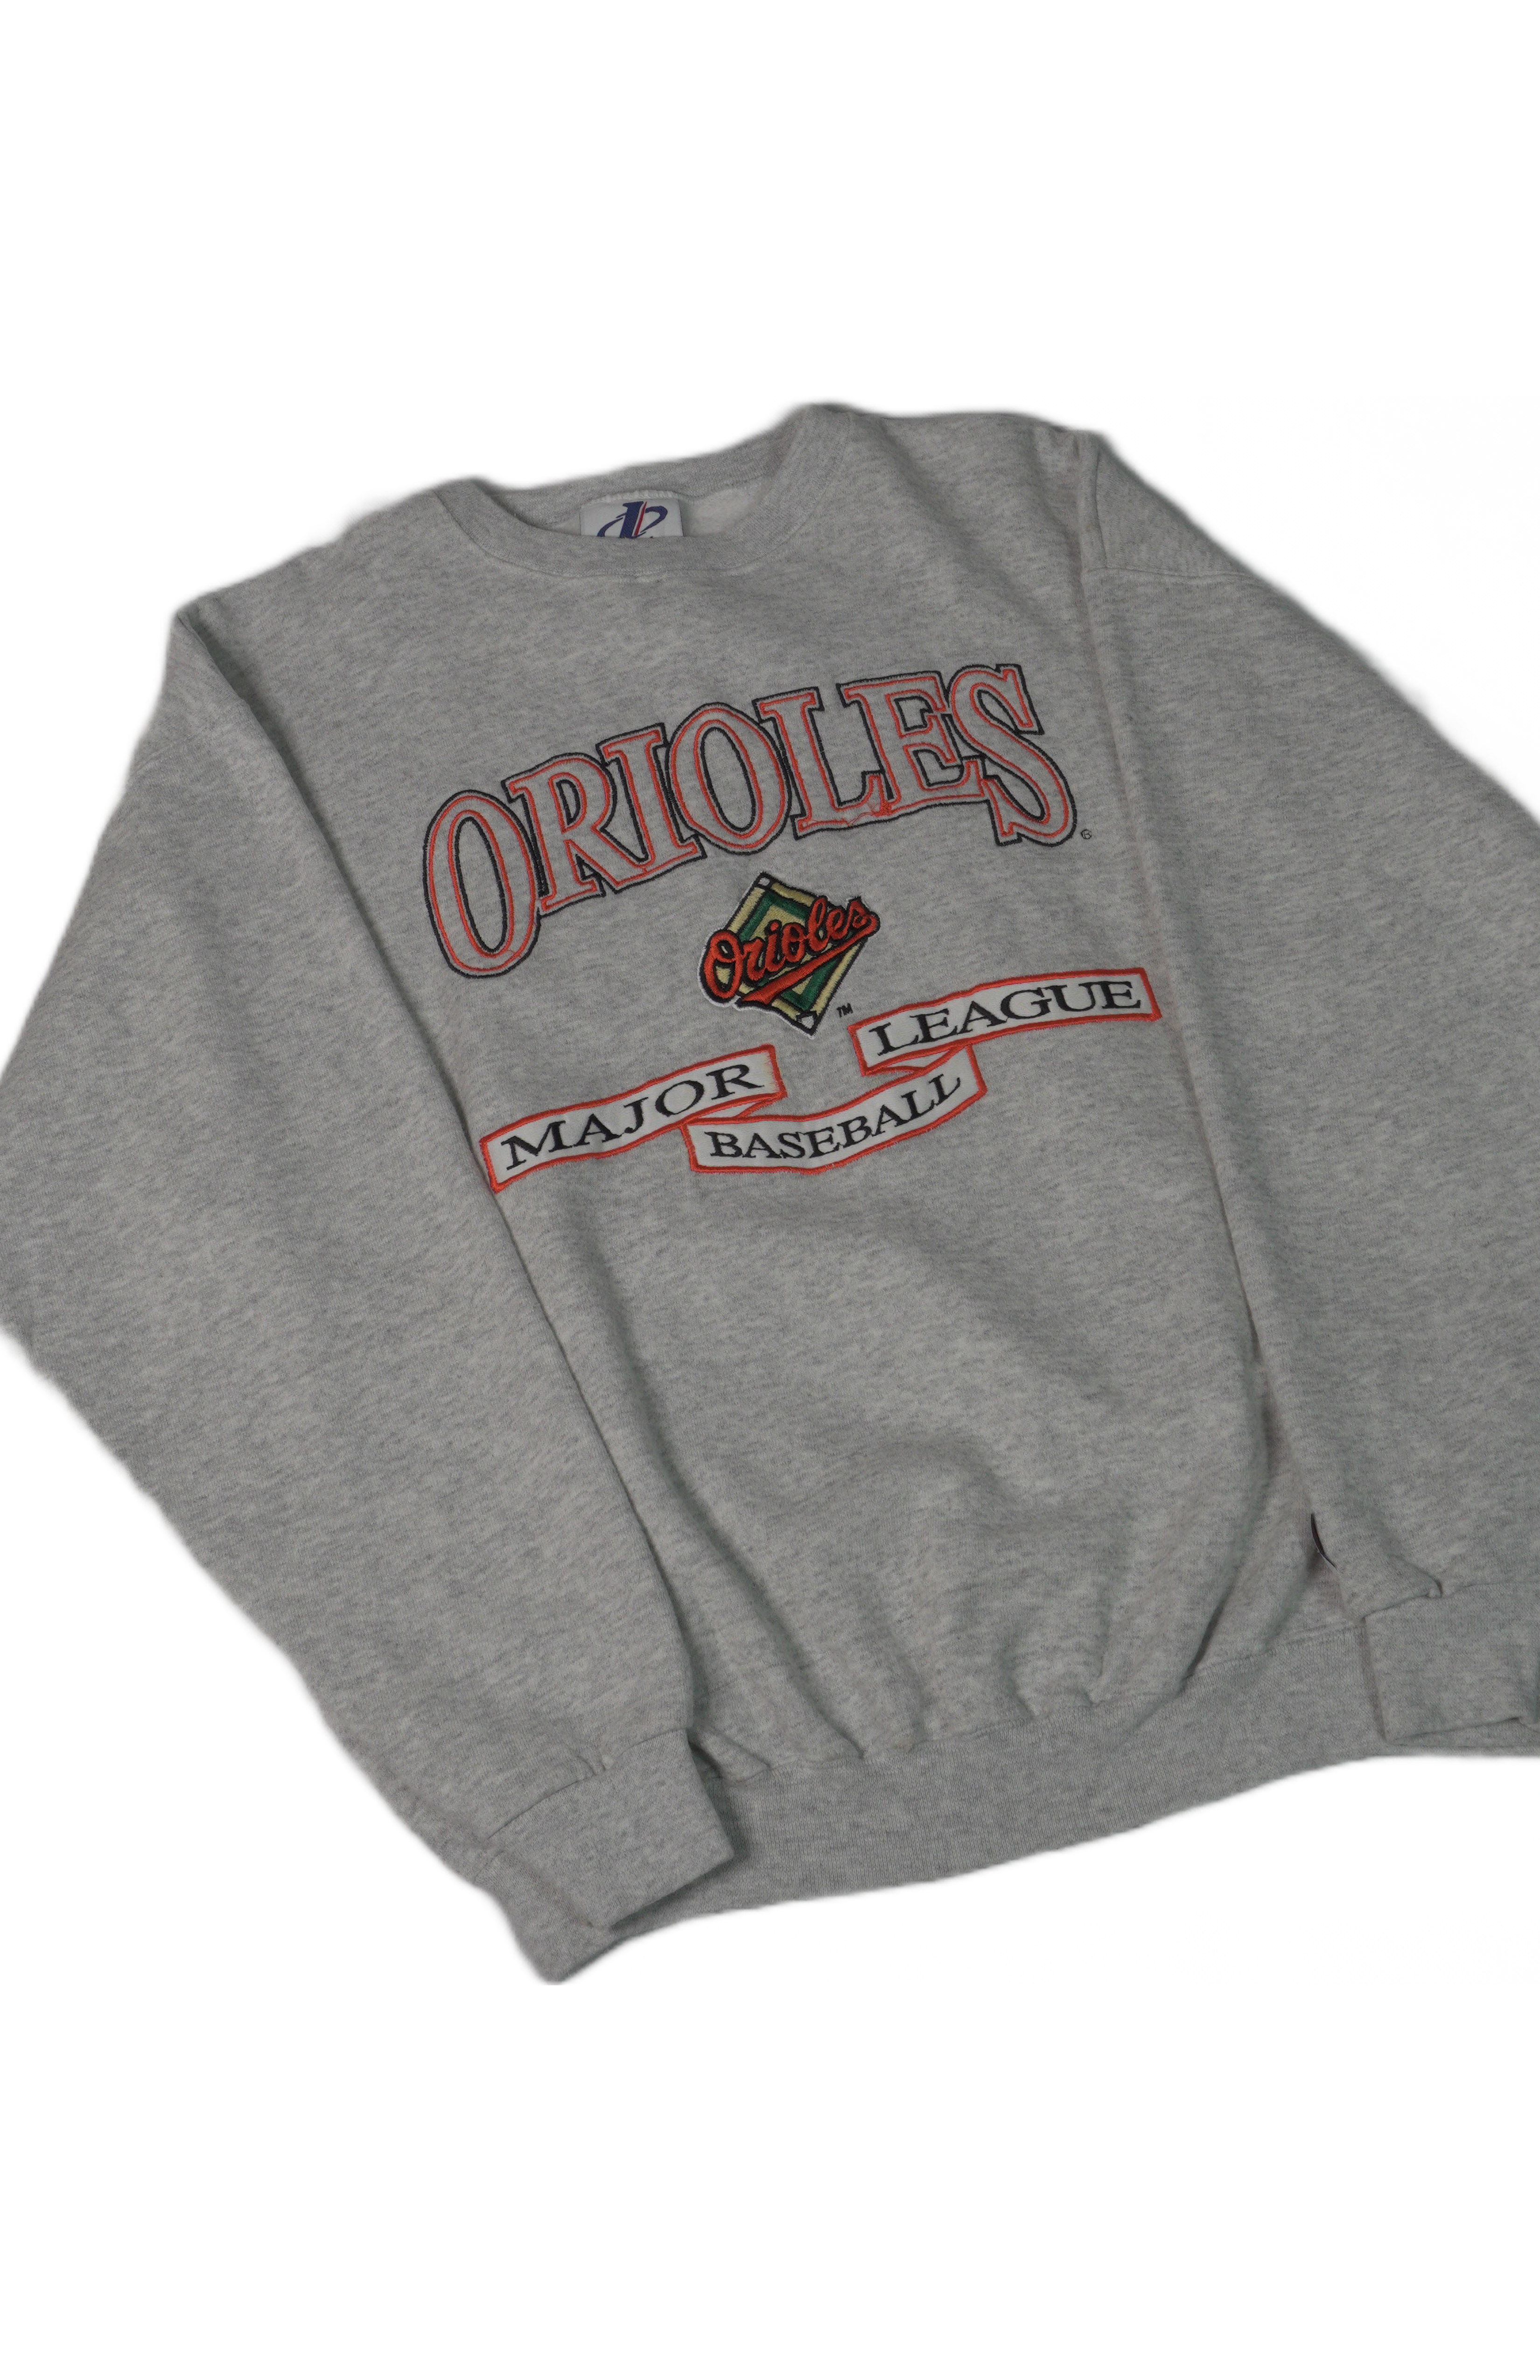 vintage orioles sweatshirt